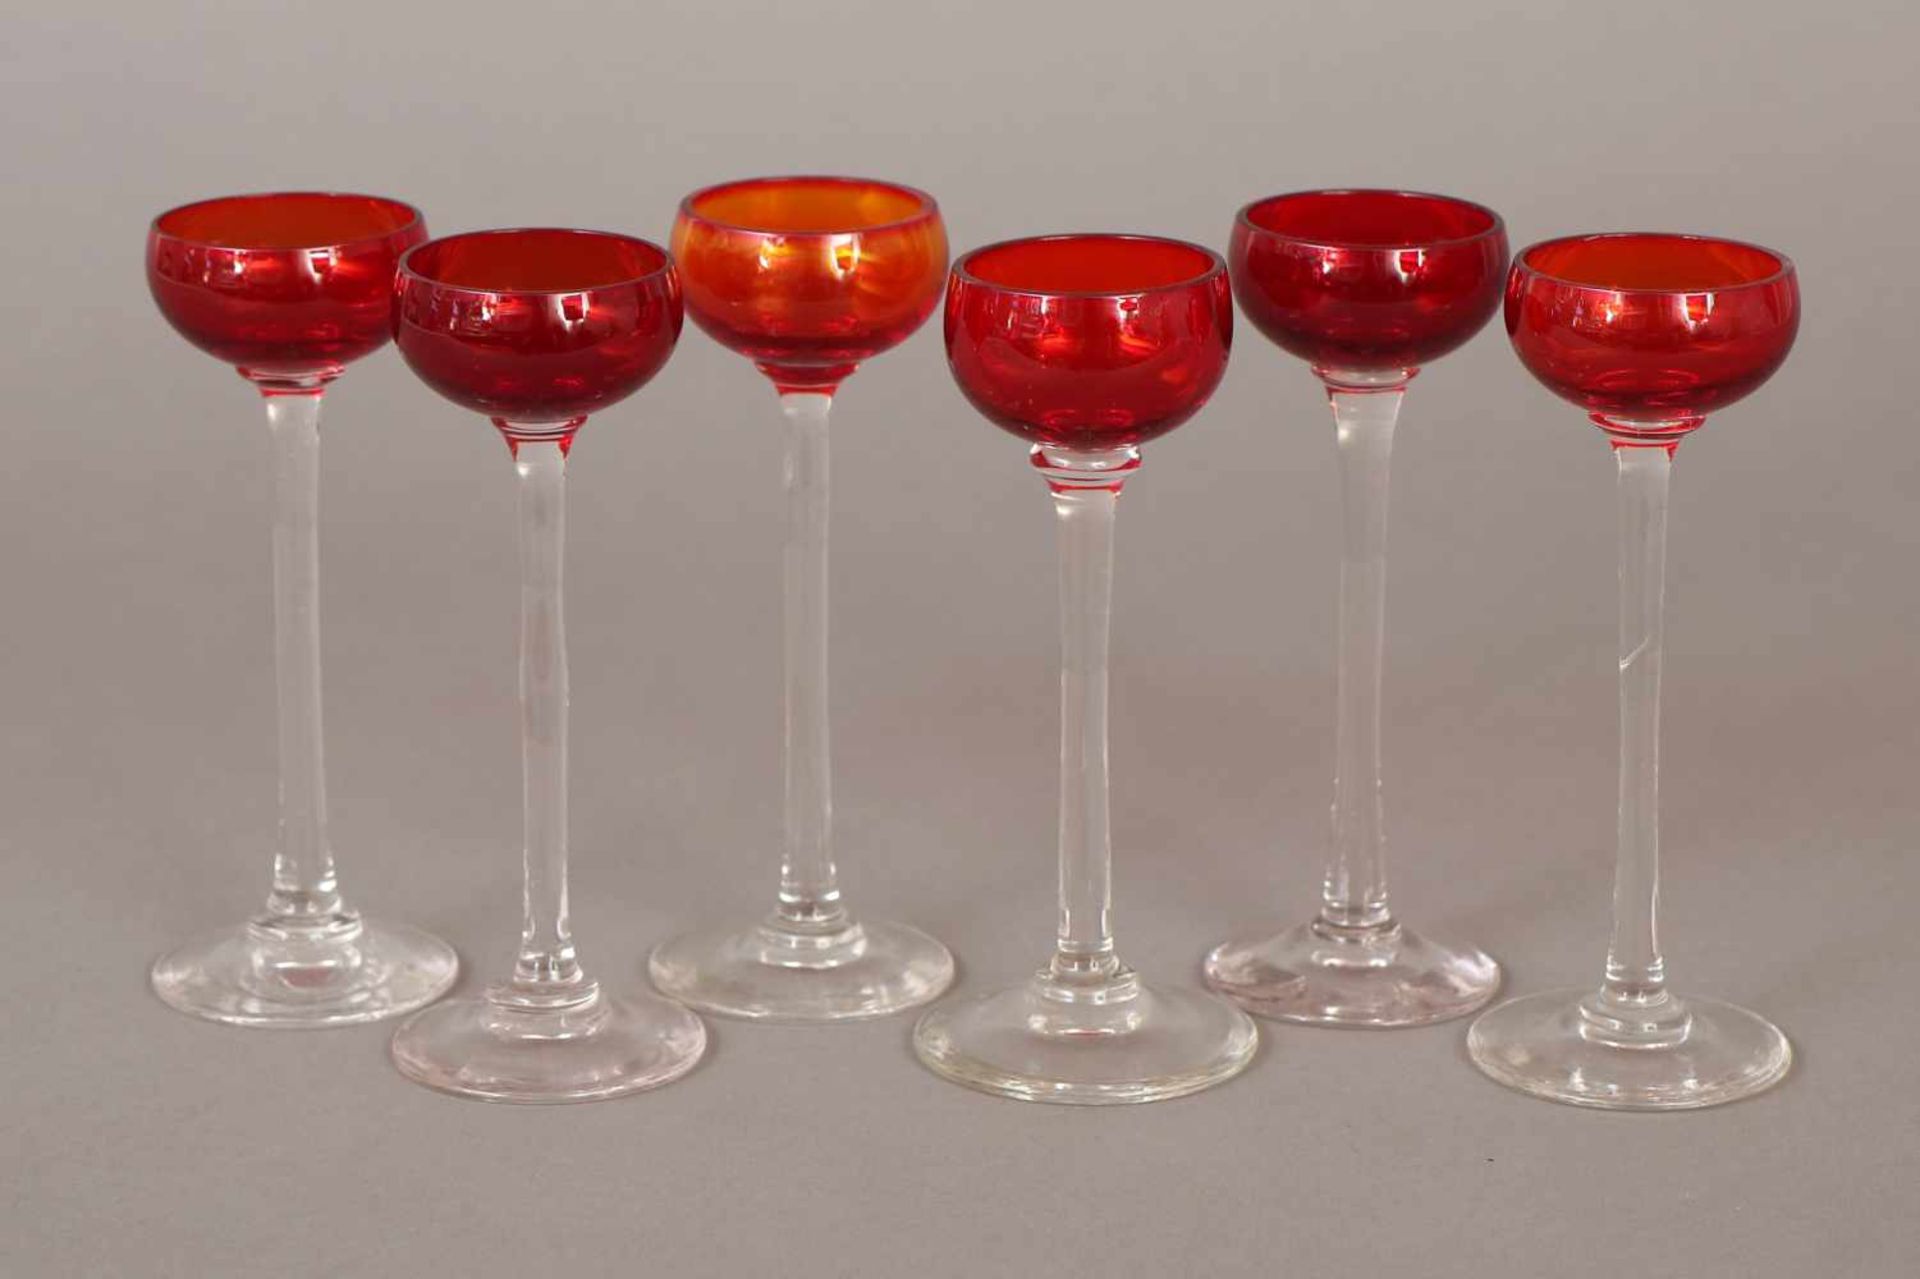 6 Likörgläserunbekannter Hersteller, langstielige Gläser mit rot-orangener Kuppa, H ca. 13cm